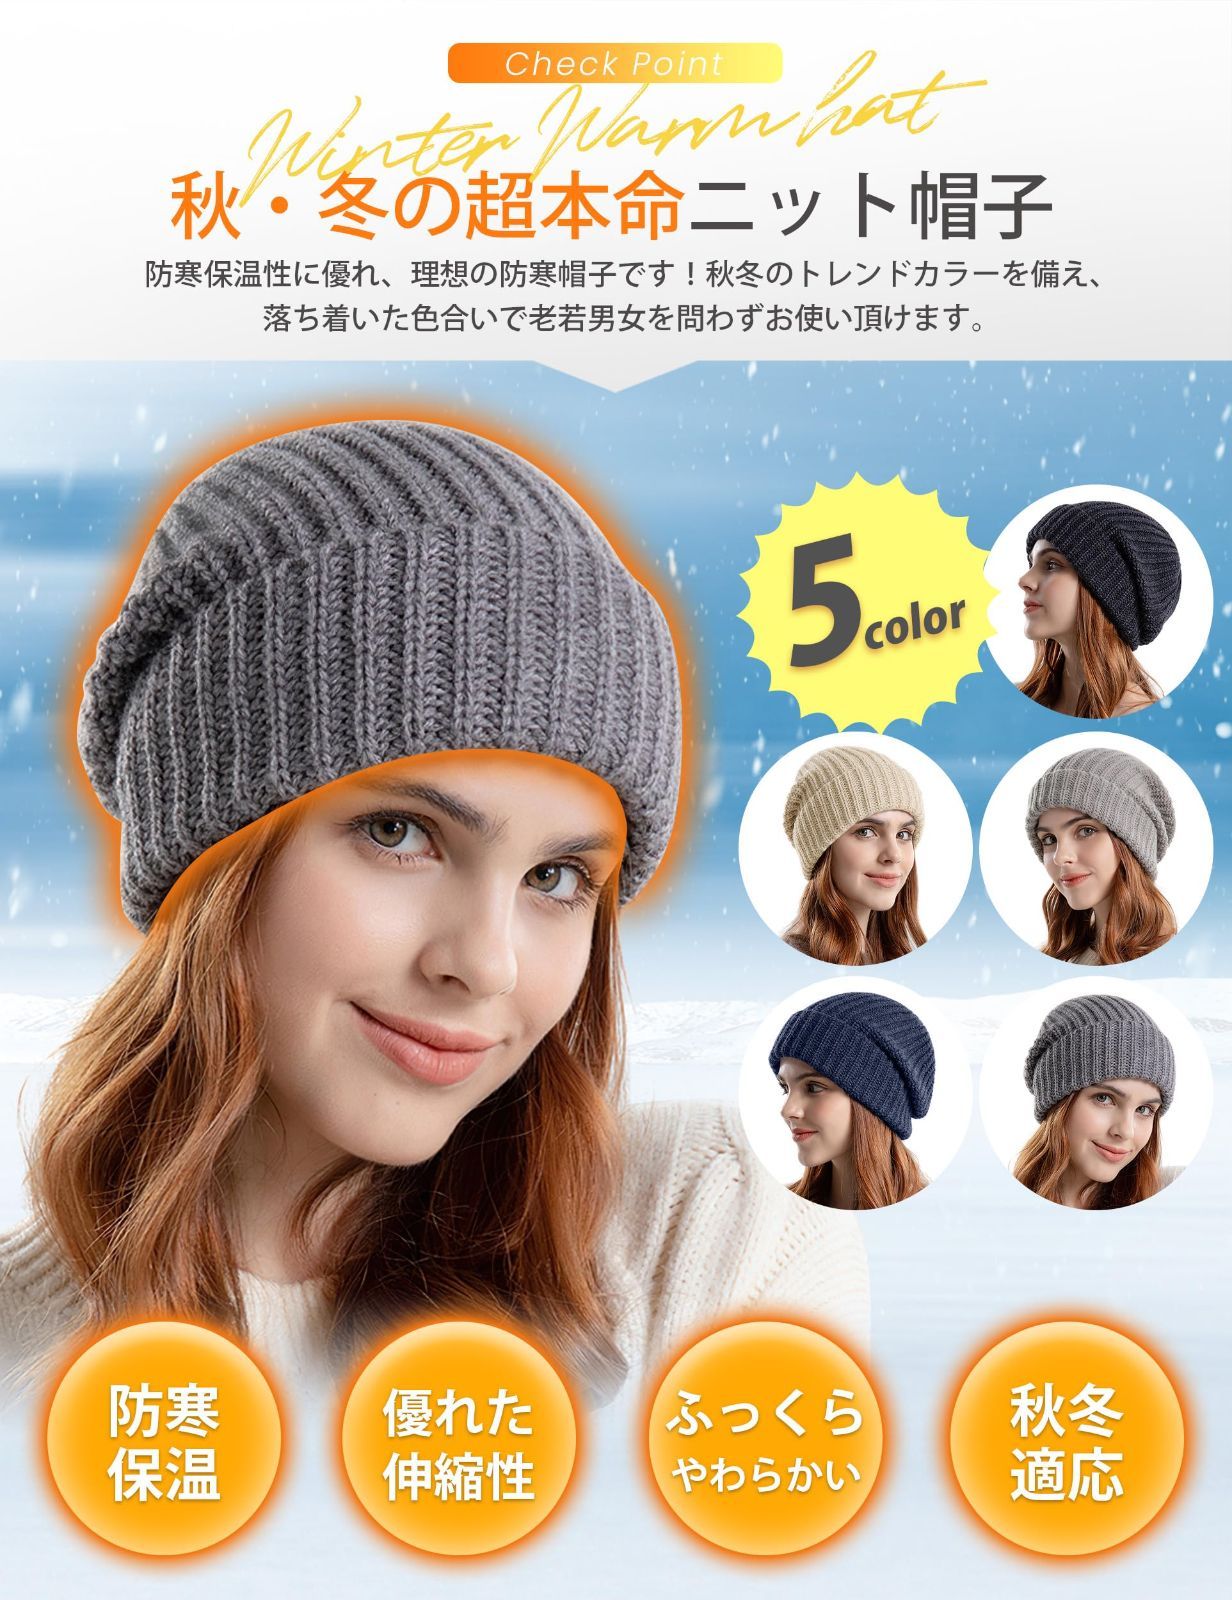 Faslie] 防寒保温 超ストレッチ ふっくら柔らかい 冬用 ニット帽